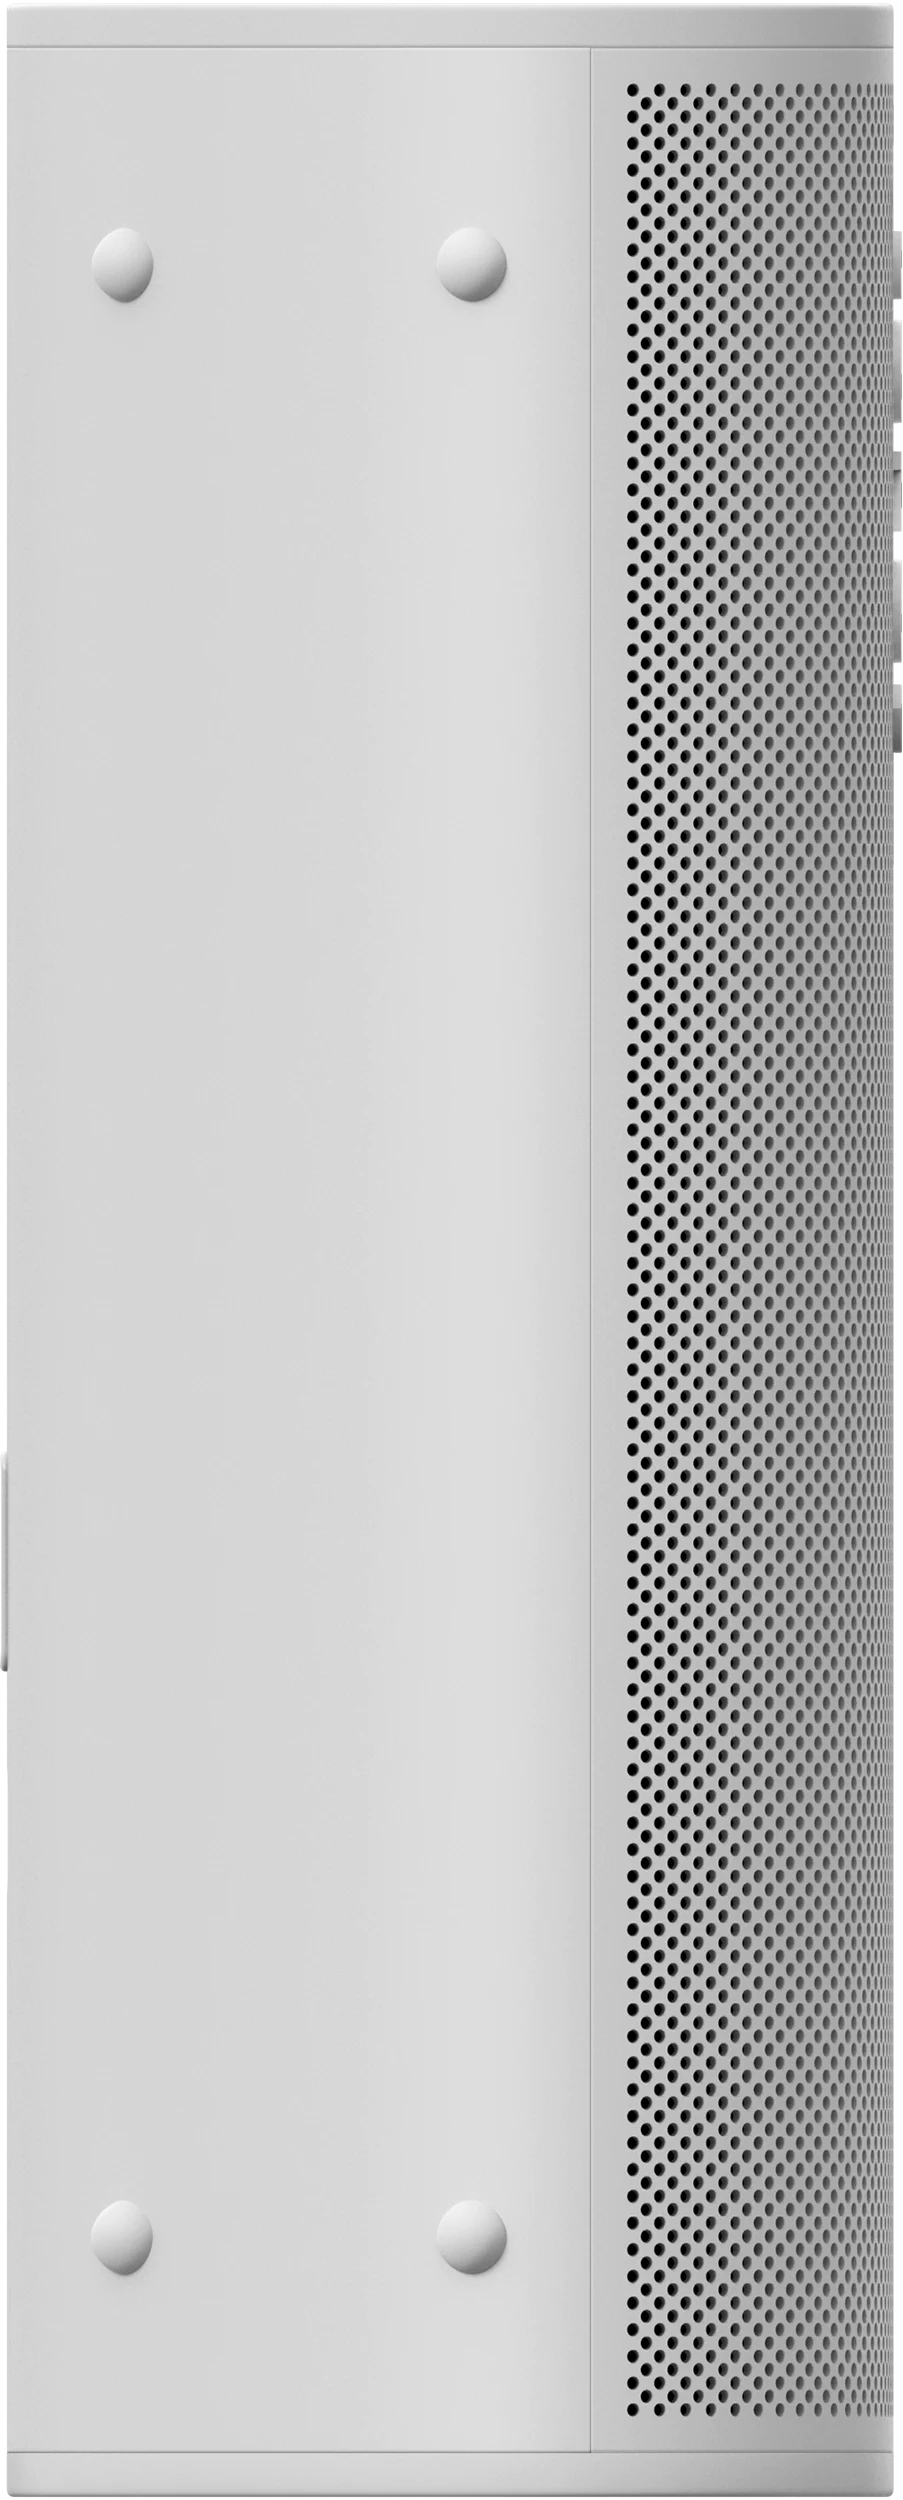 Sonos Roam Wireless Bluetooth Speaker, Lunar White ROAM1US1 - Adorama